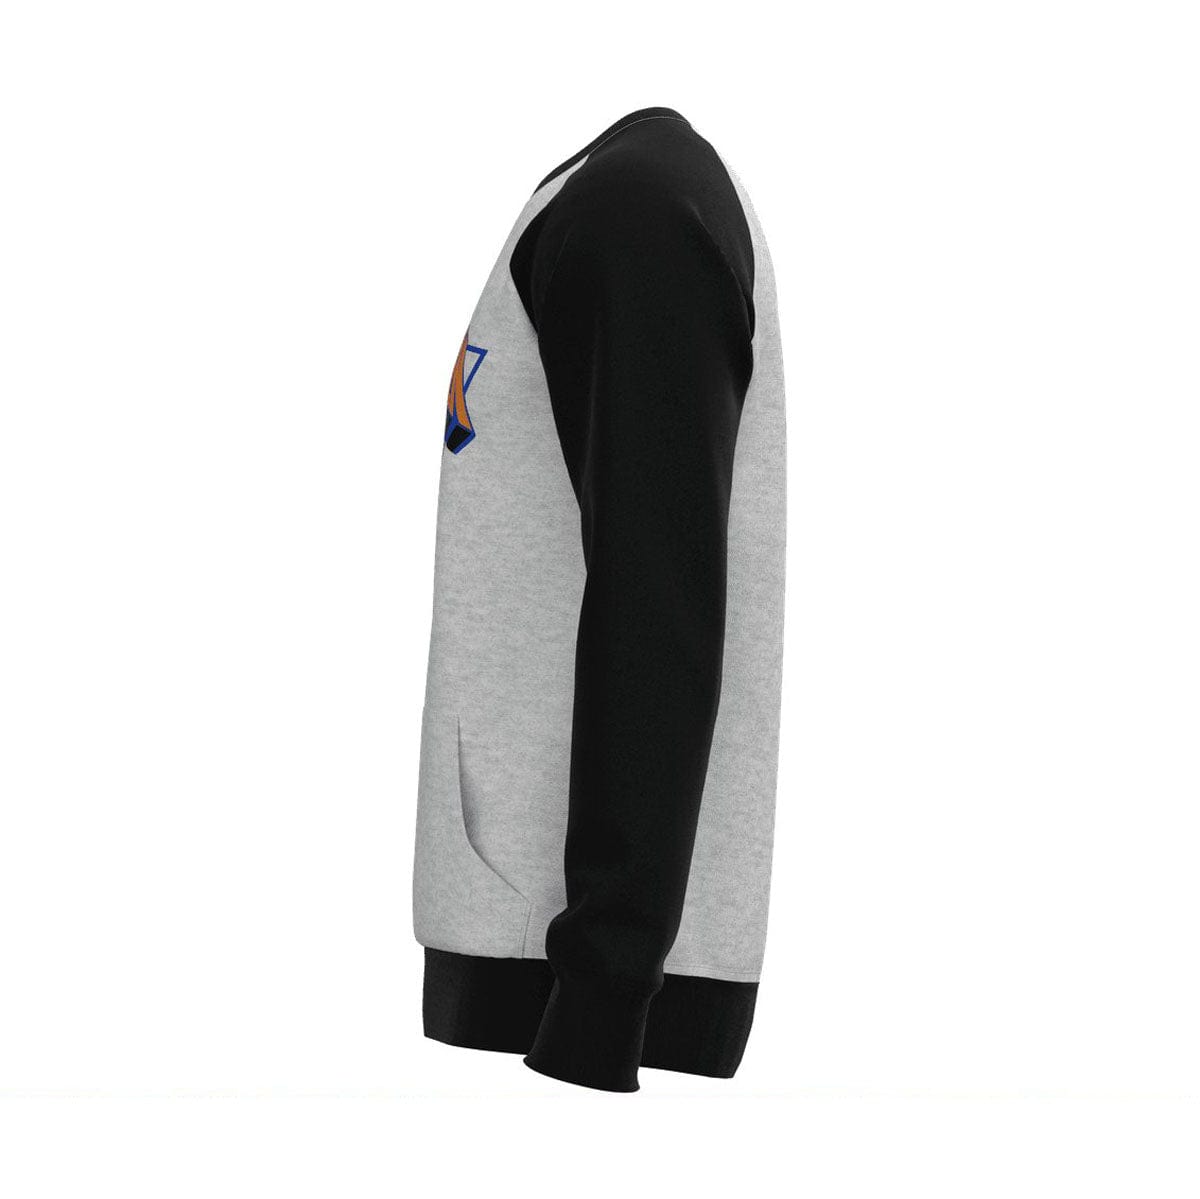 J.Hinton Collections Men's New York Knicks Inspired Raglan Sweatshirt